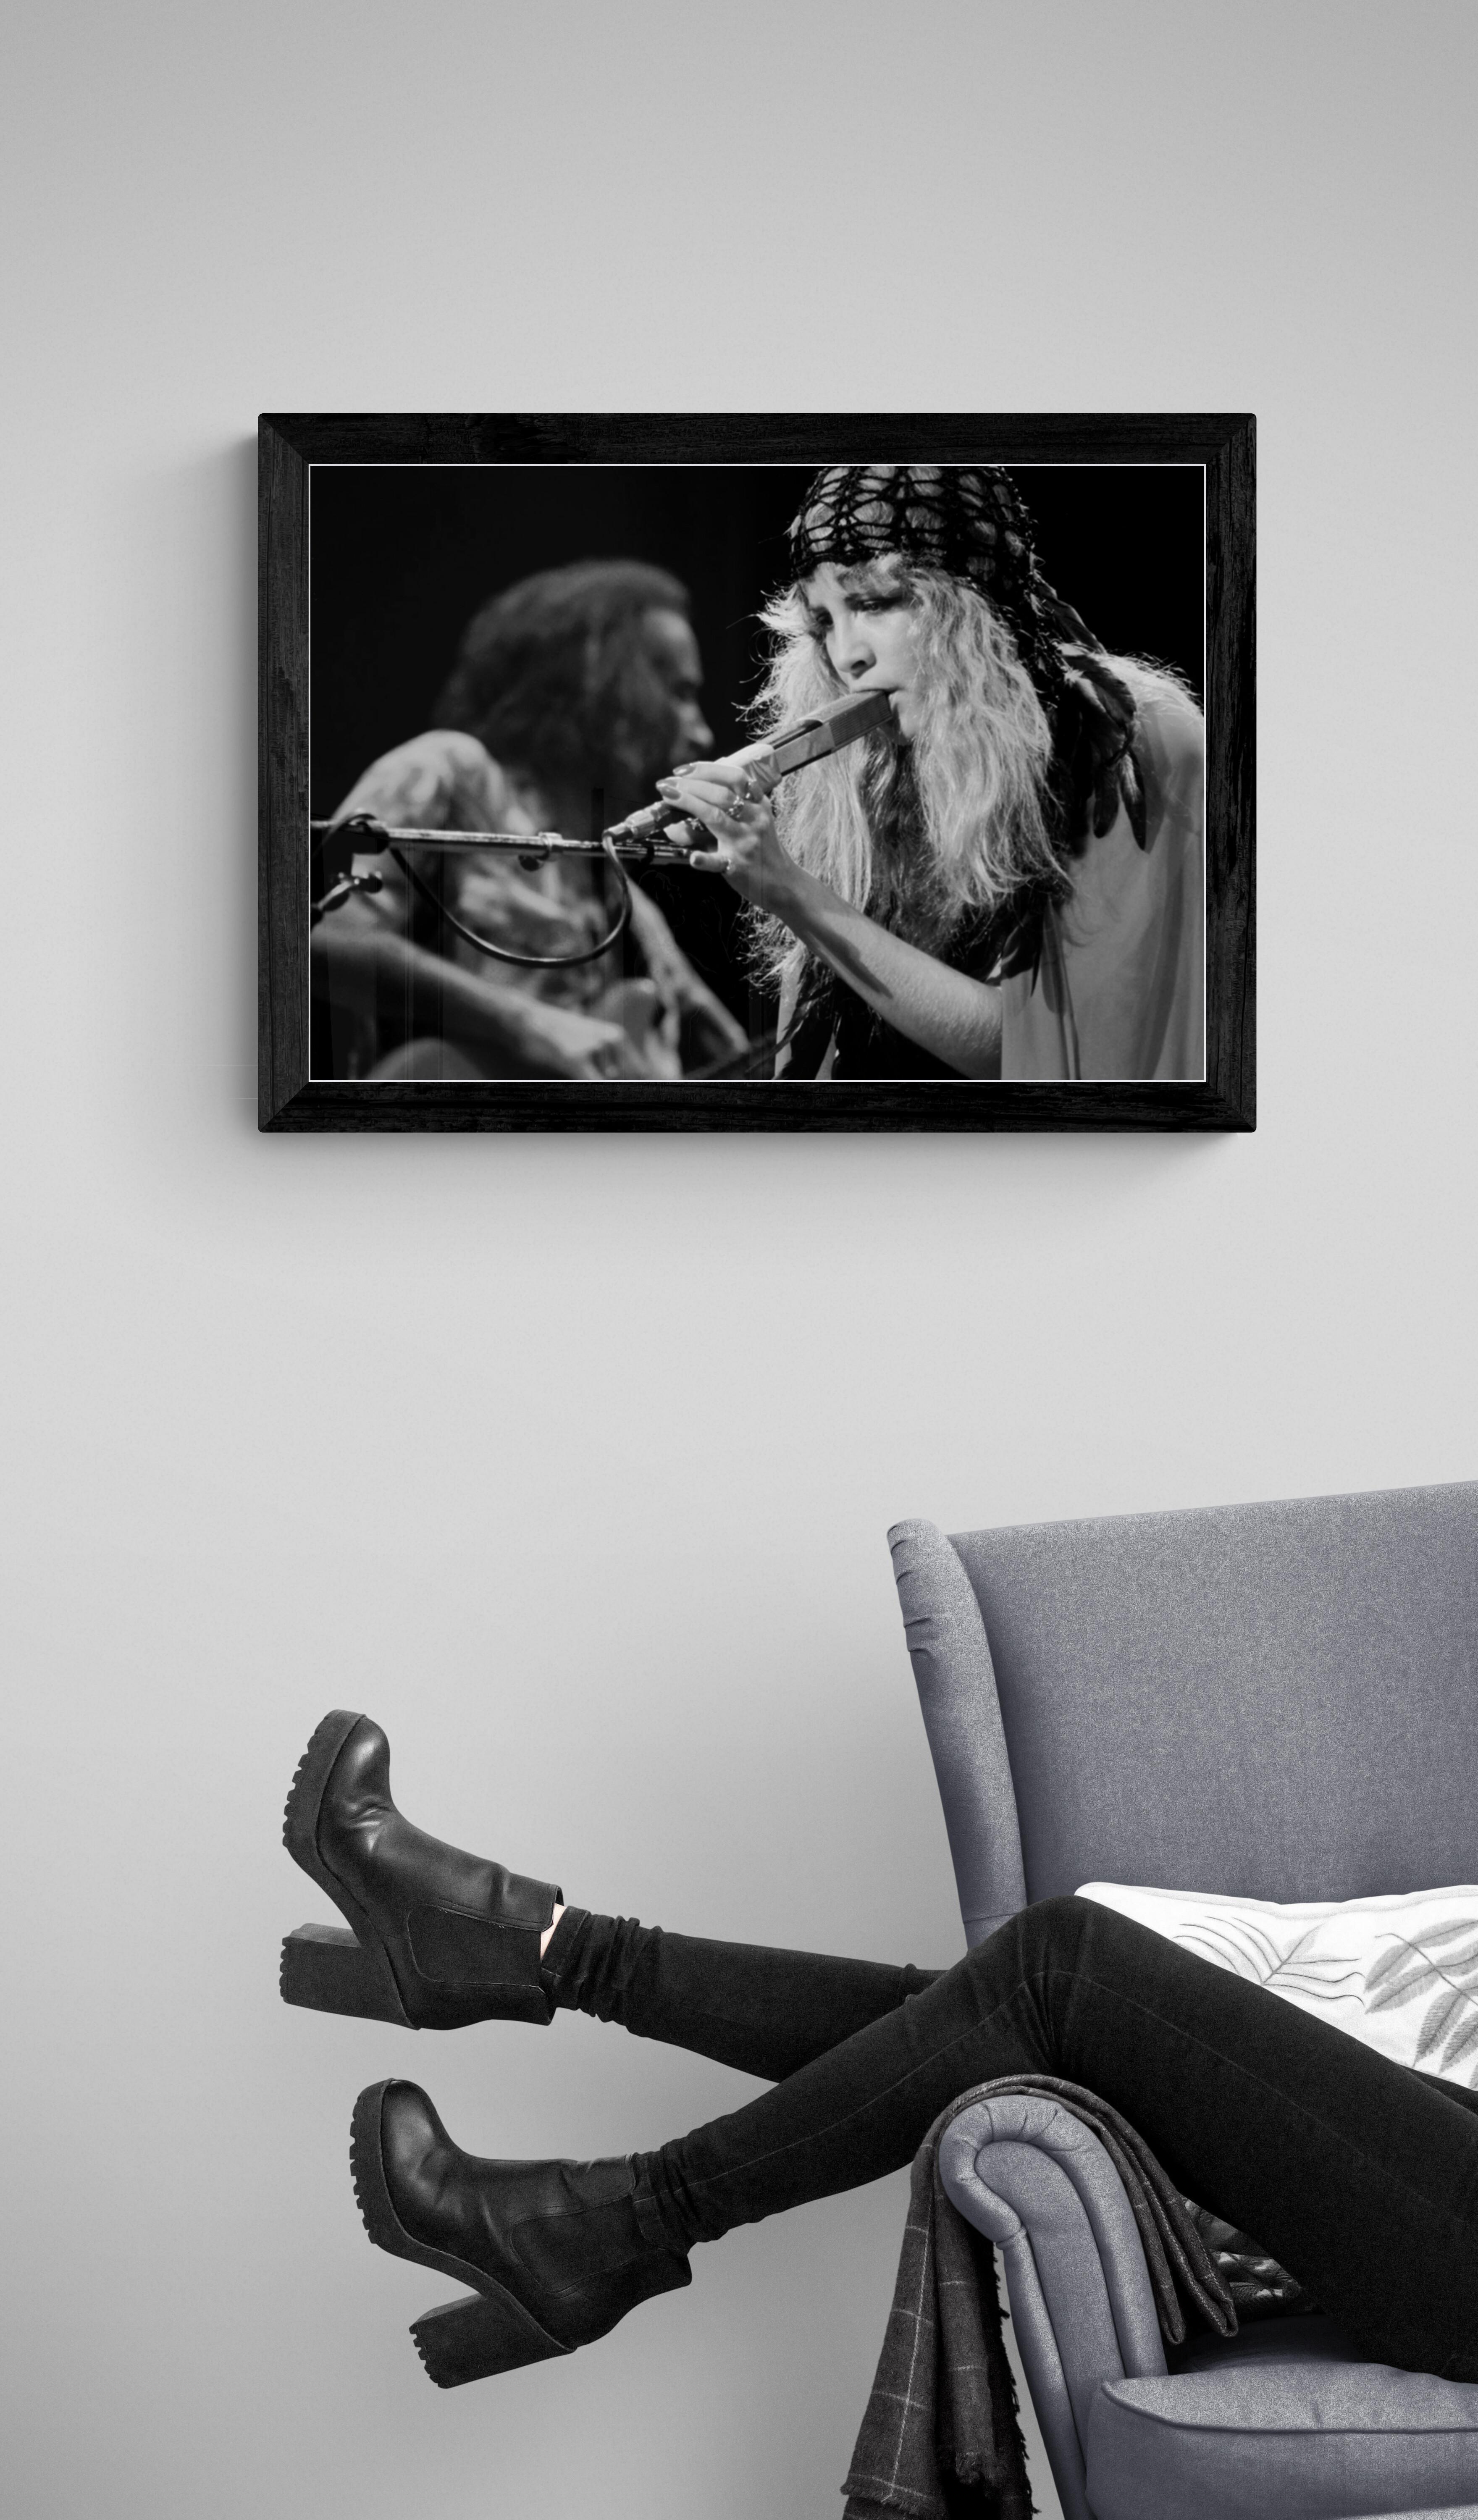 Stevie Nicks #7 - Black Black and White Photograph by Richard E. Aaron